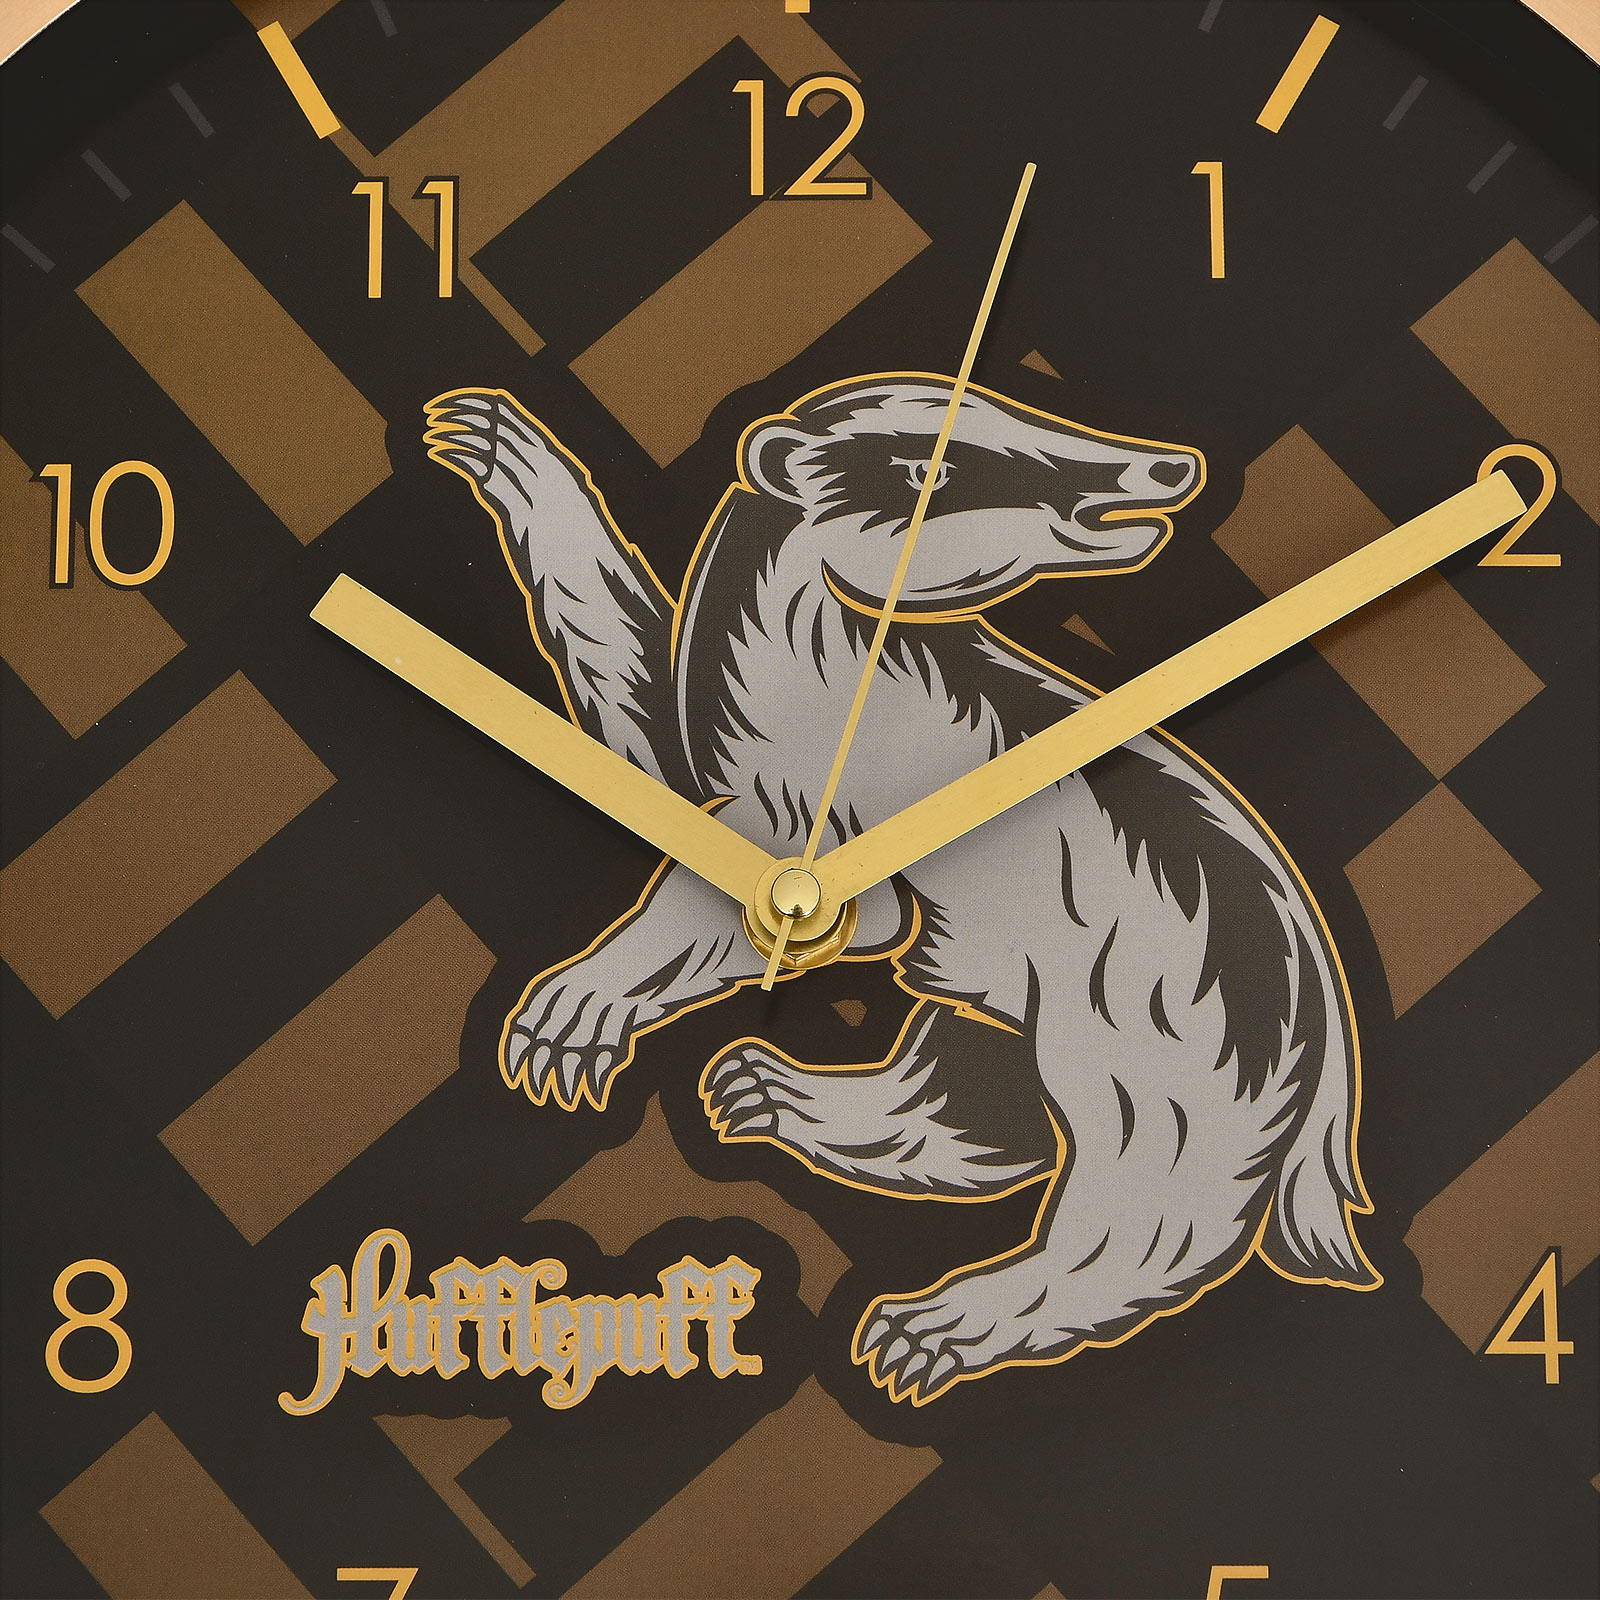 Harry Potter - Horloge murale Hufflepuff